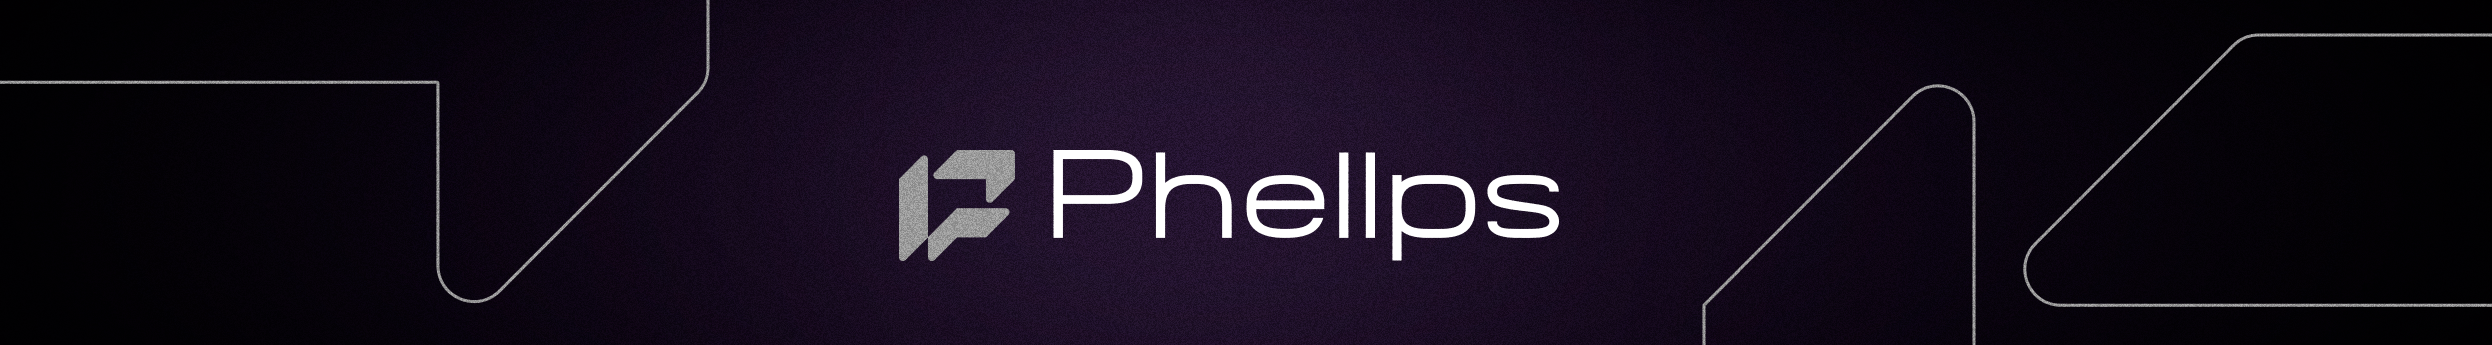 Phellipe Lopes's profile banner